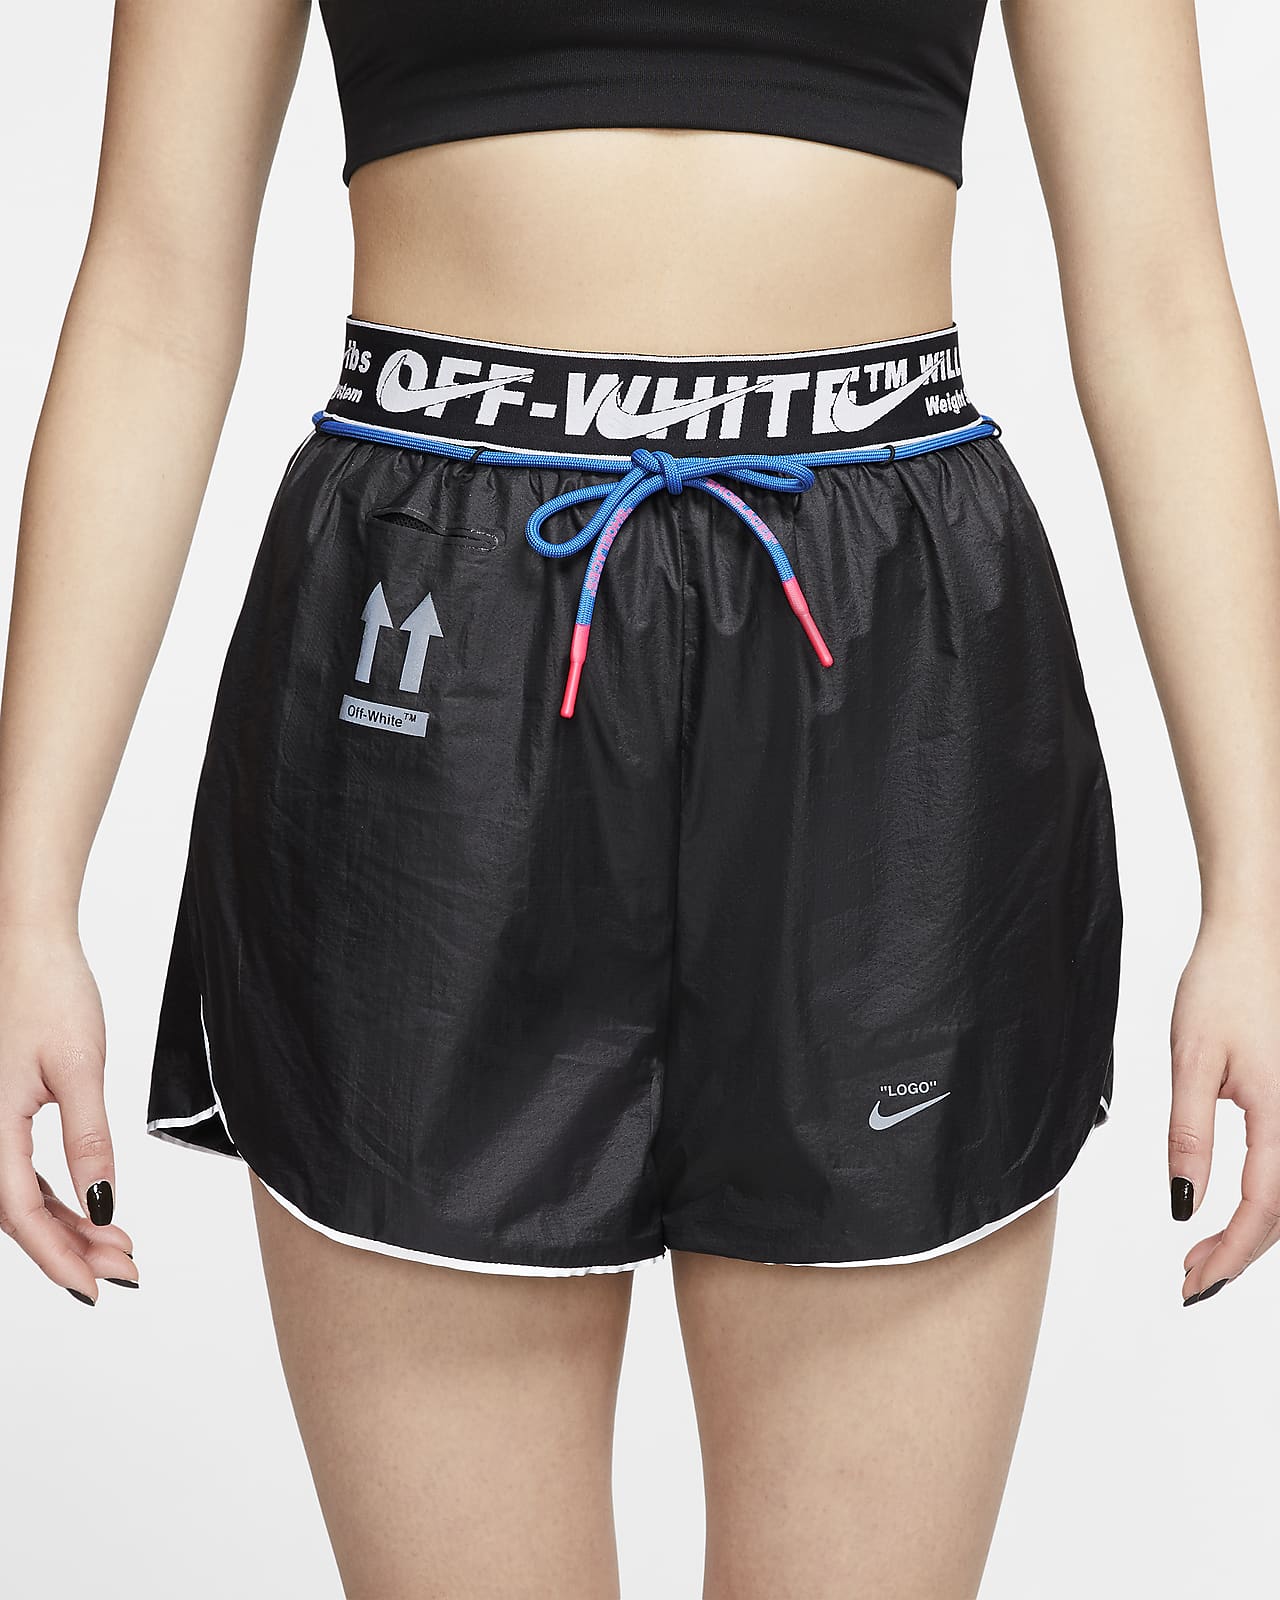 Nike x Off-White Women’s Shorts